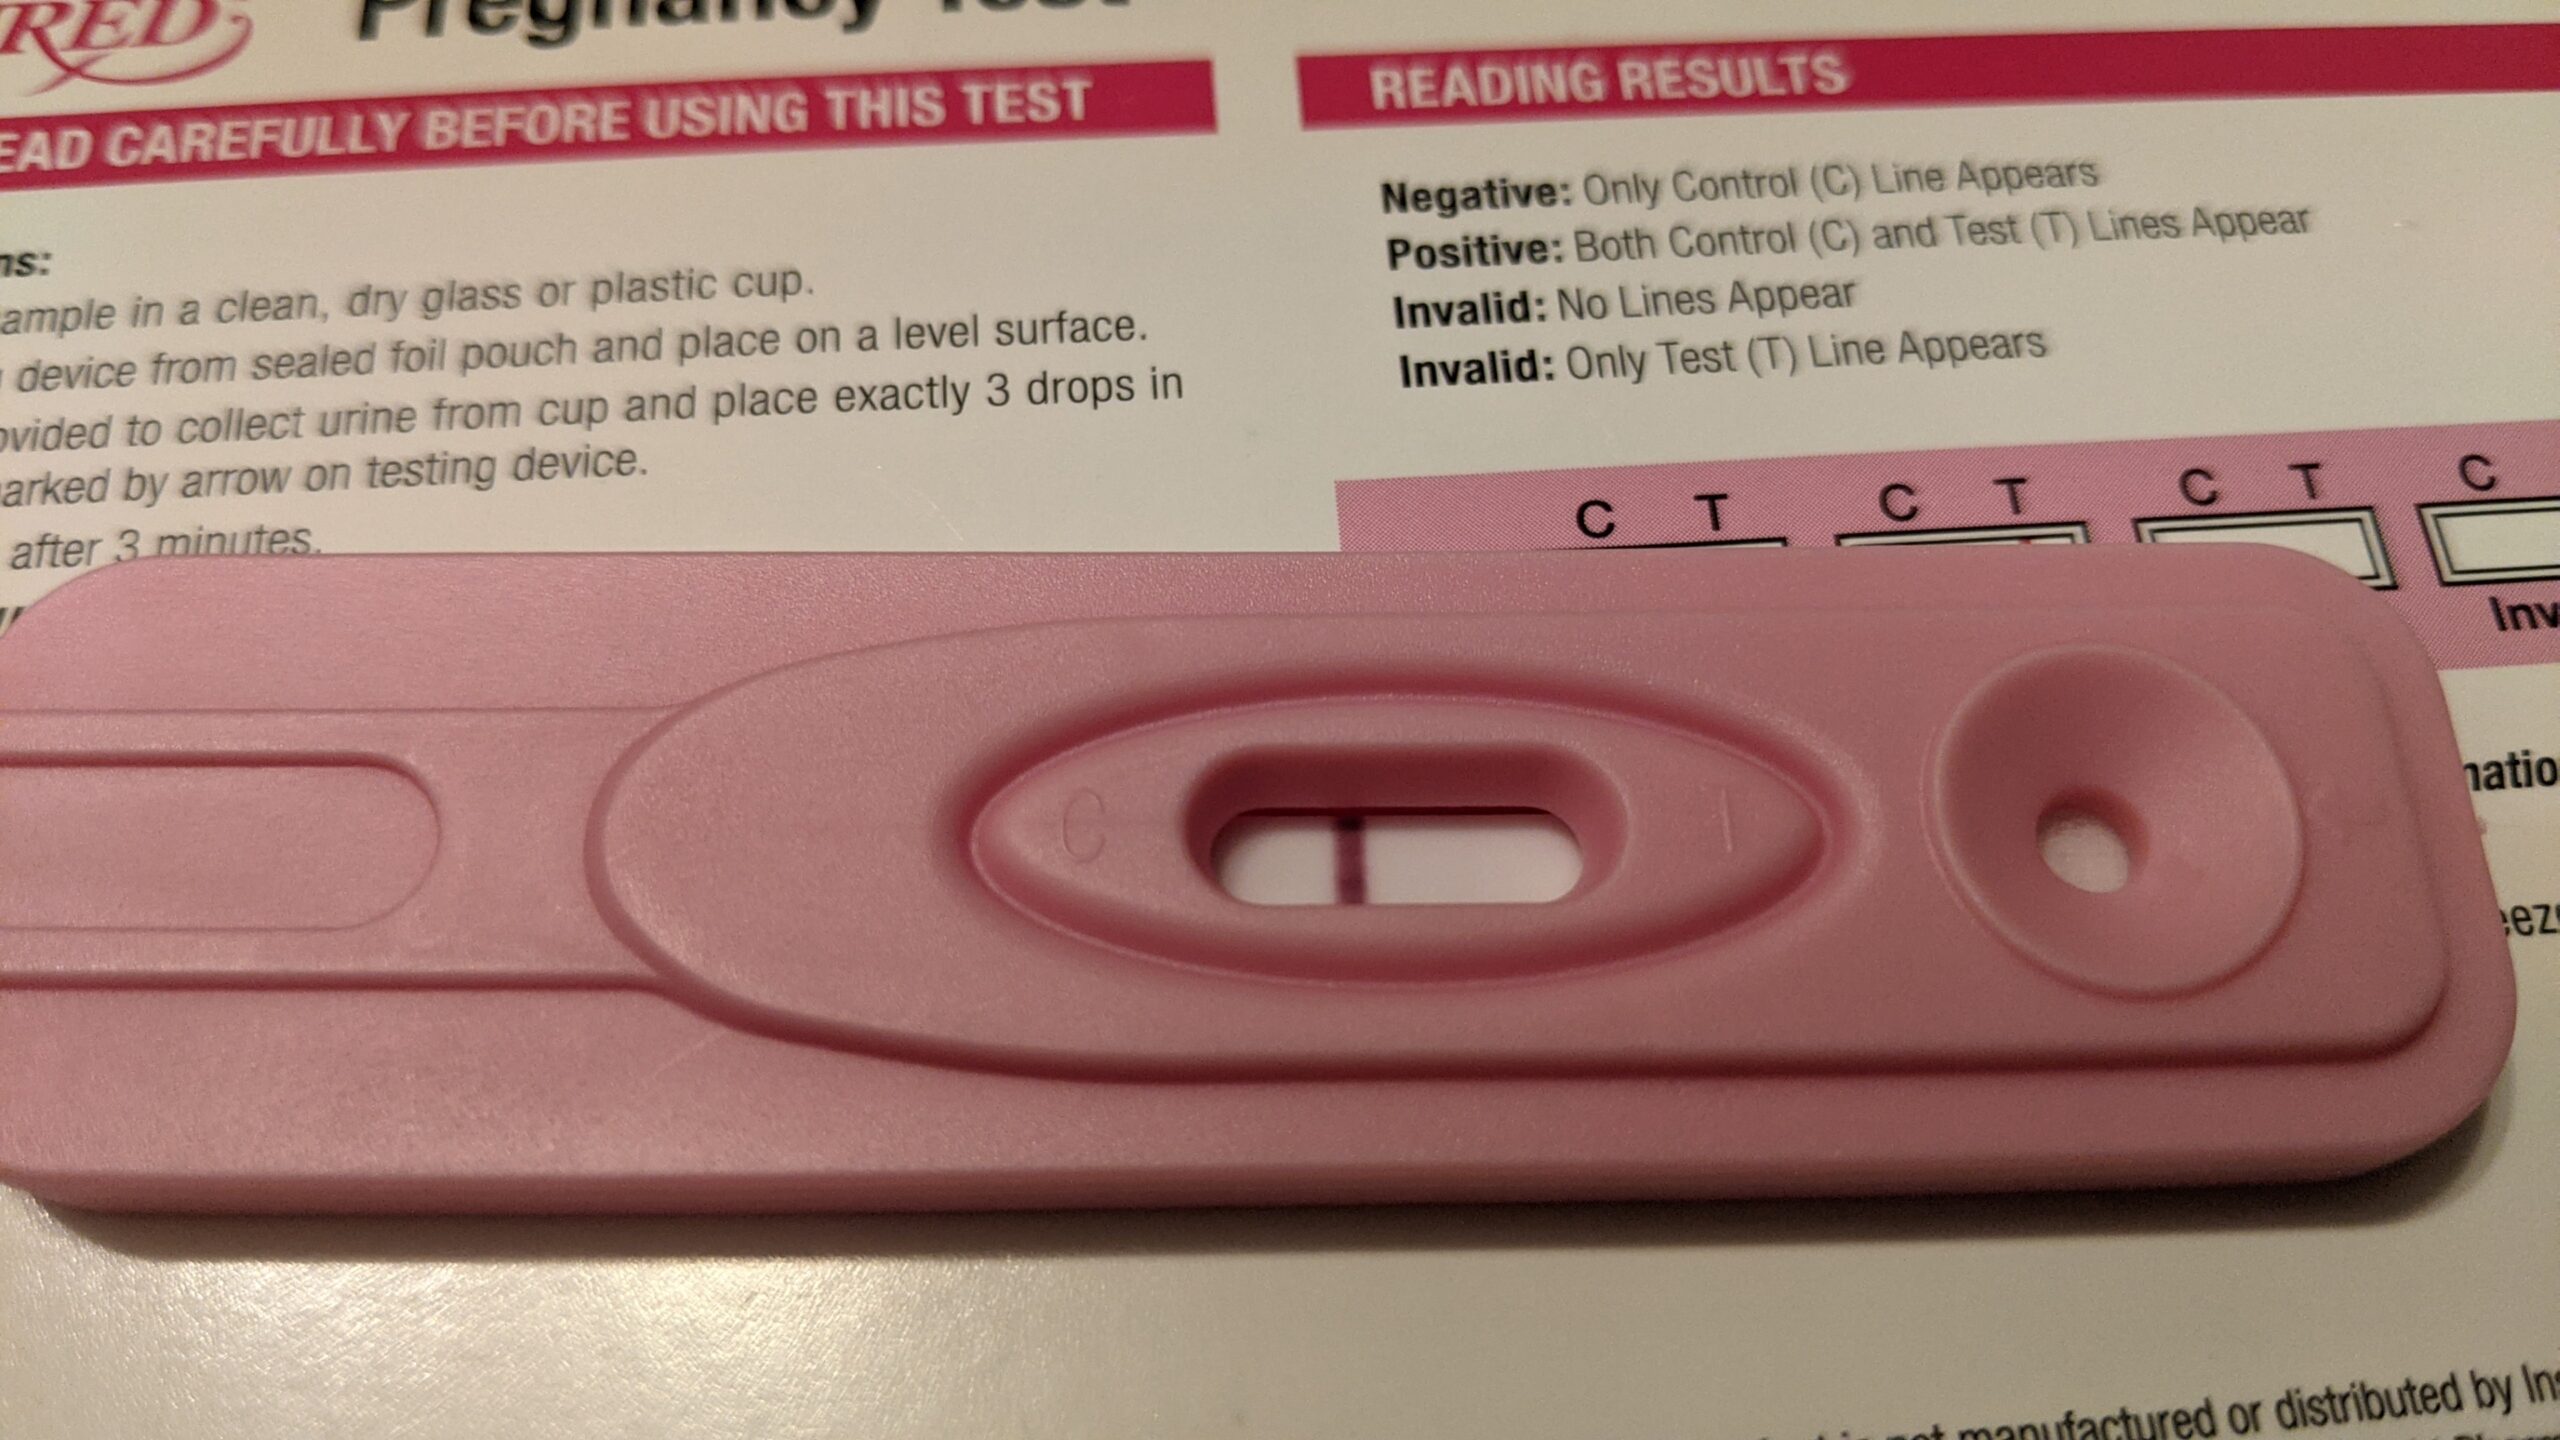 Negative pregnancy test.